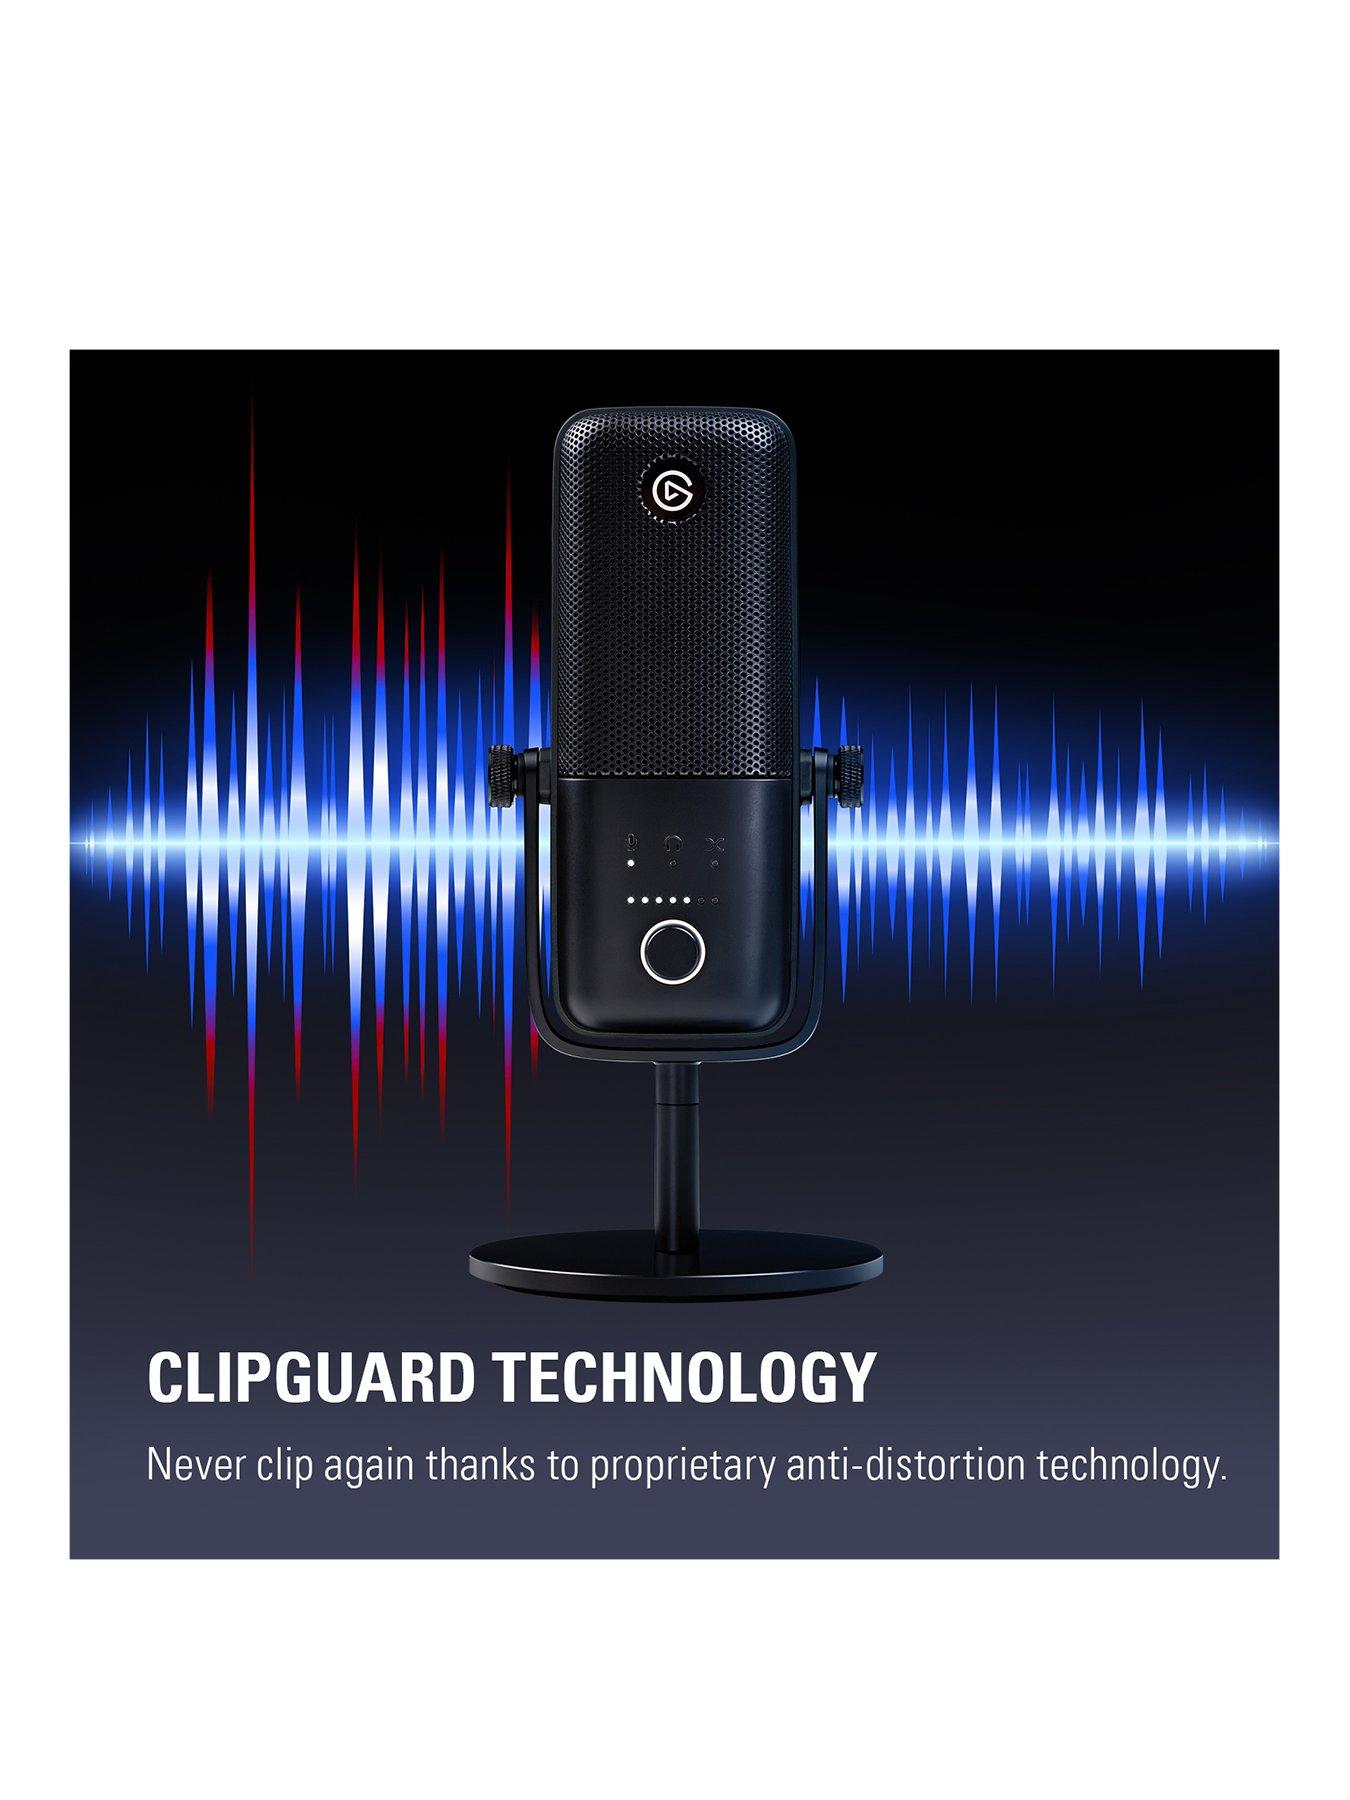 Elgato Wave:3 - Premium Studio Quality USB Condenser Microphone